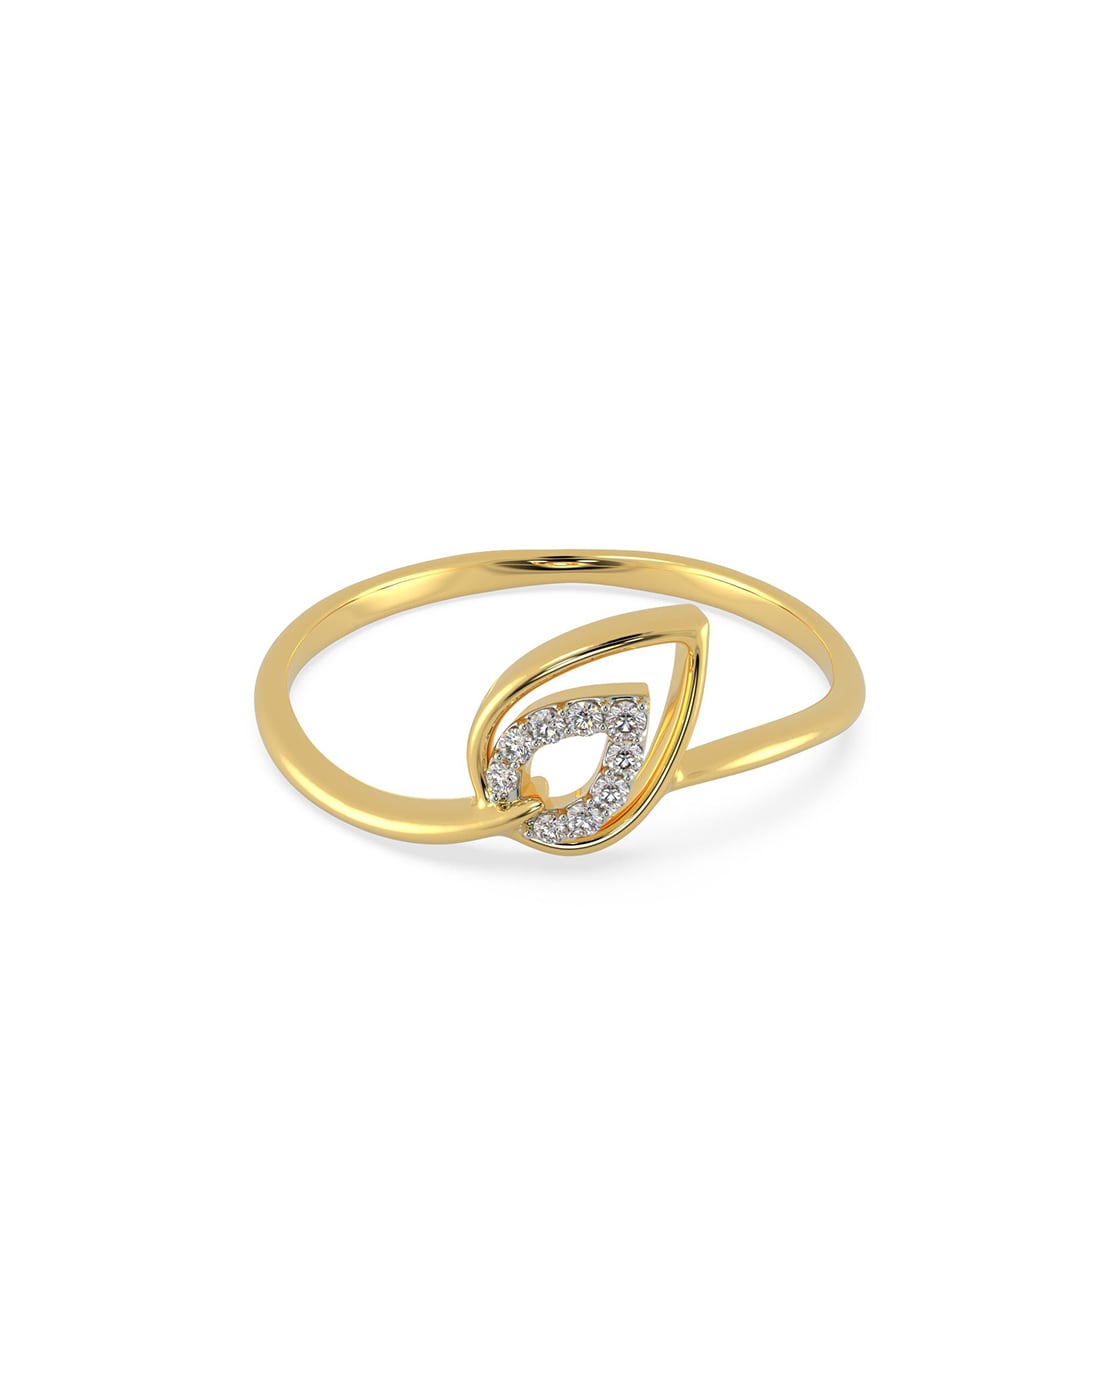 FINEROCK 1/4 Carat Diamond Engagement Ring Band in 14K Rose Gold (Ring Size  4) (I1-I2 Clarity) | Amazon.com